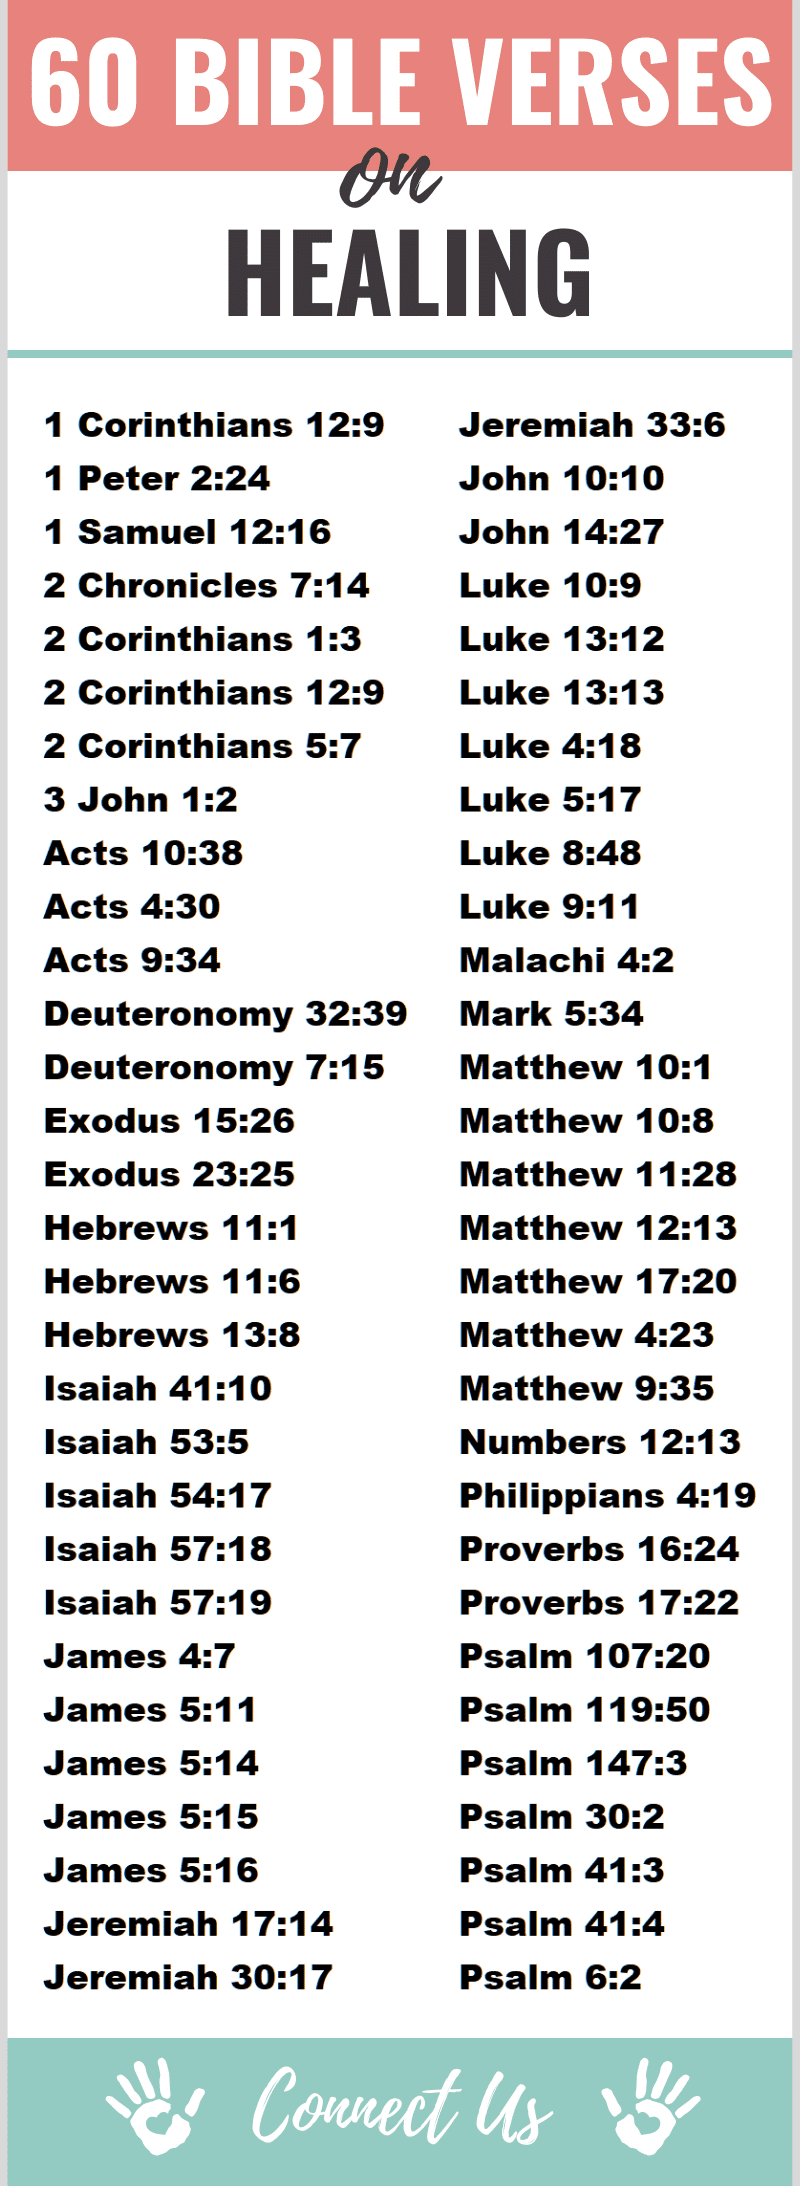 Bible Verses on Healing